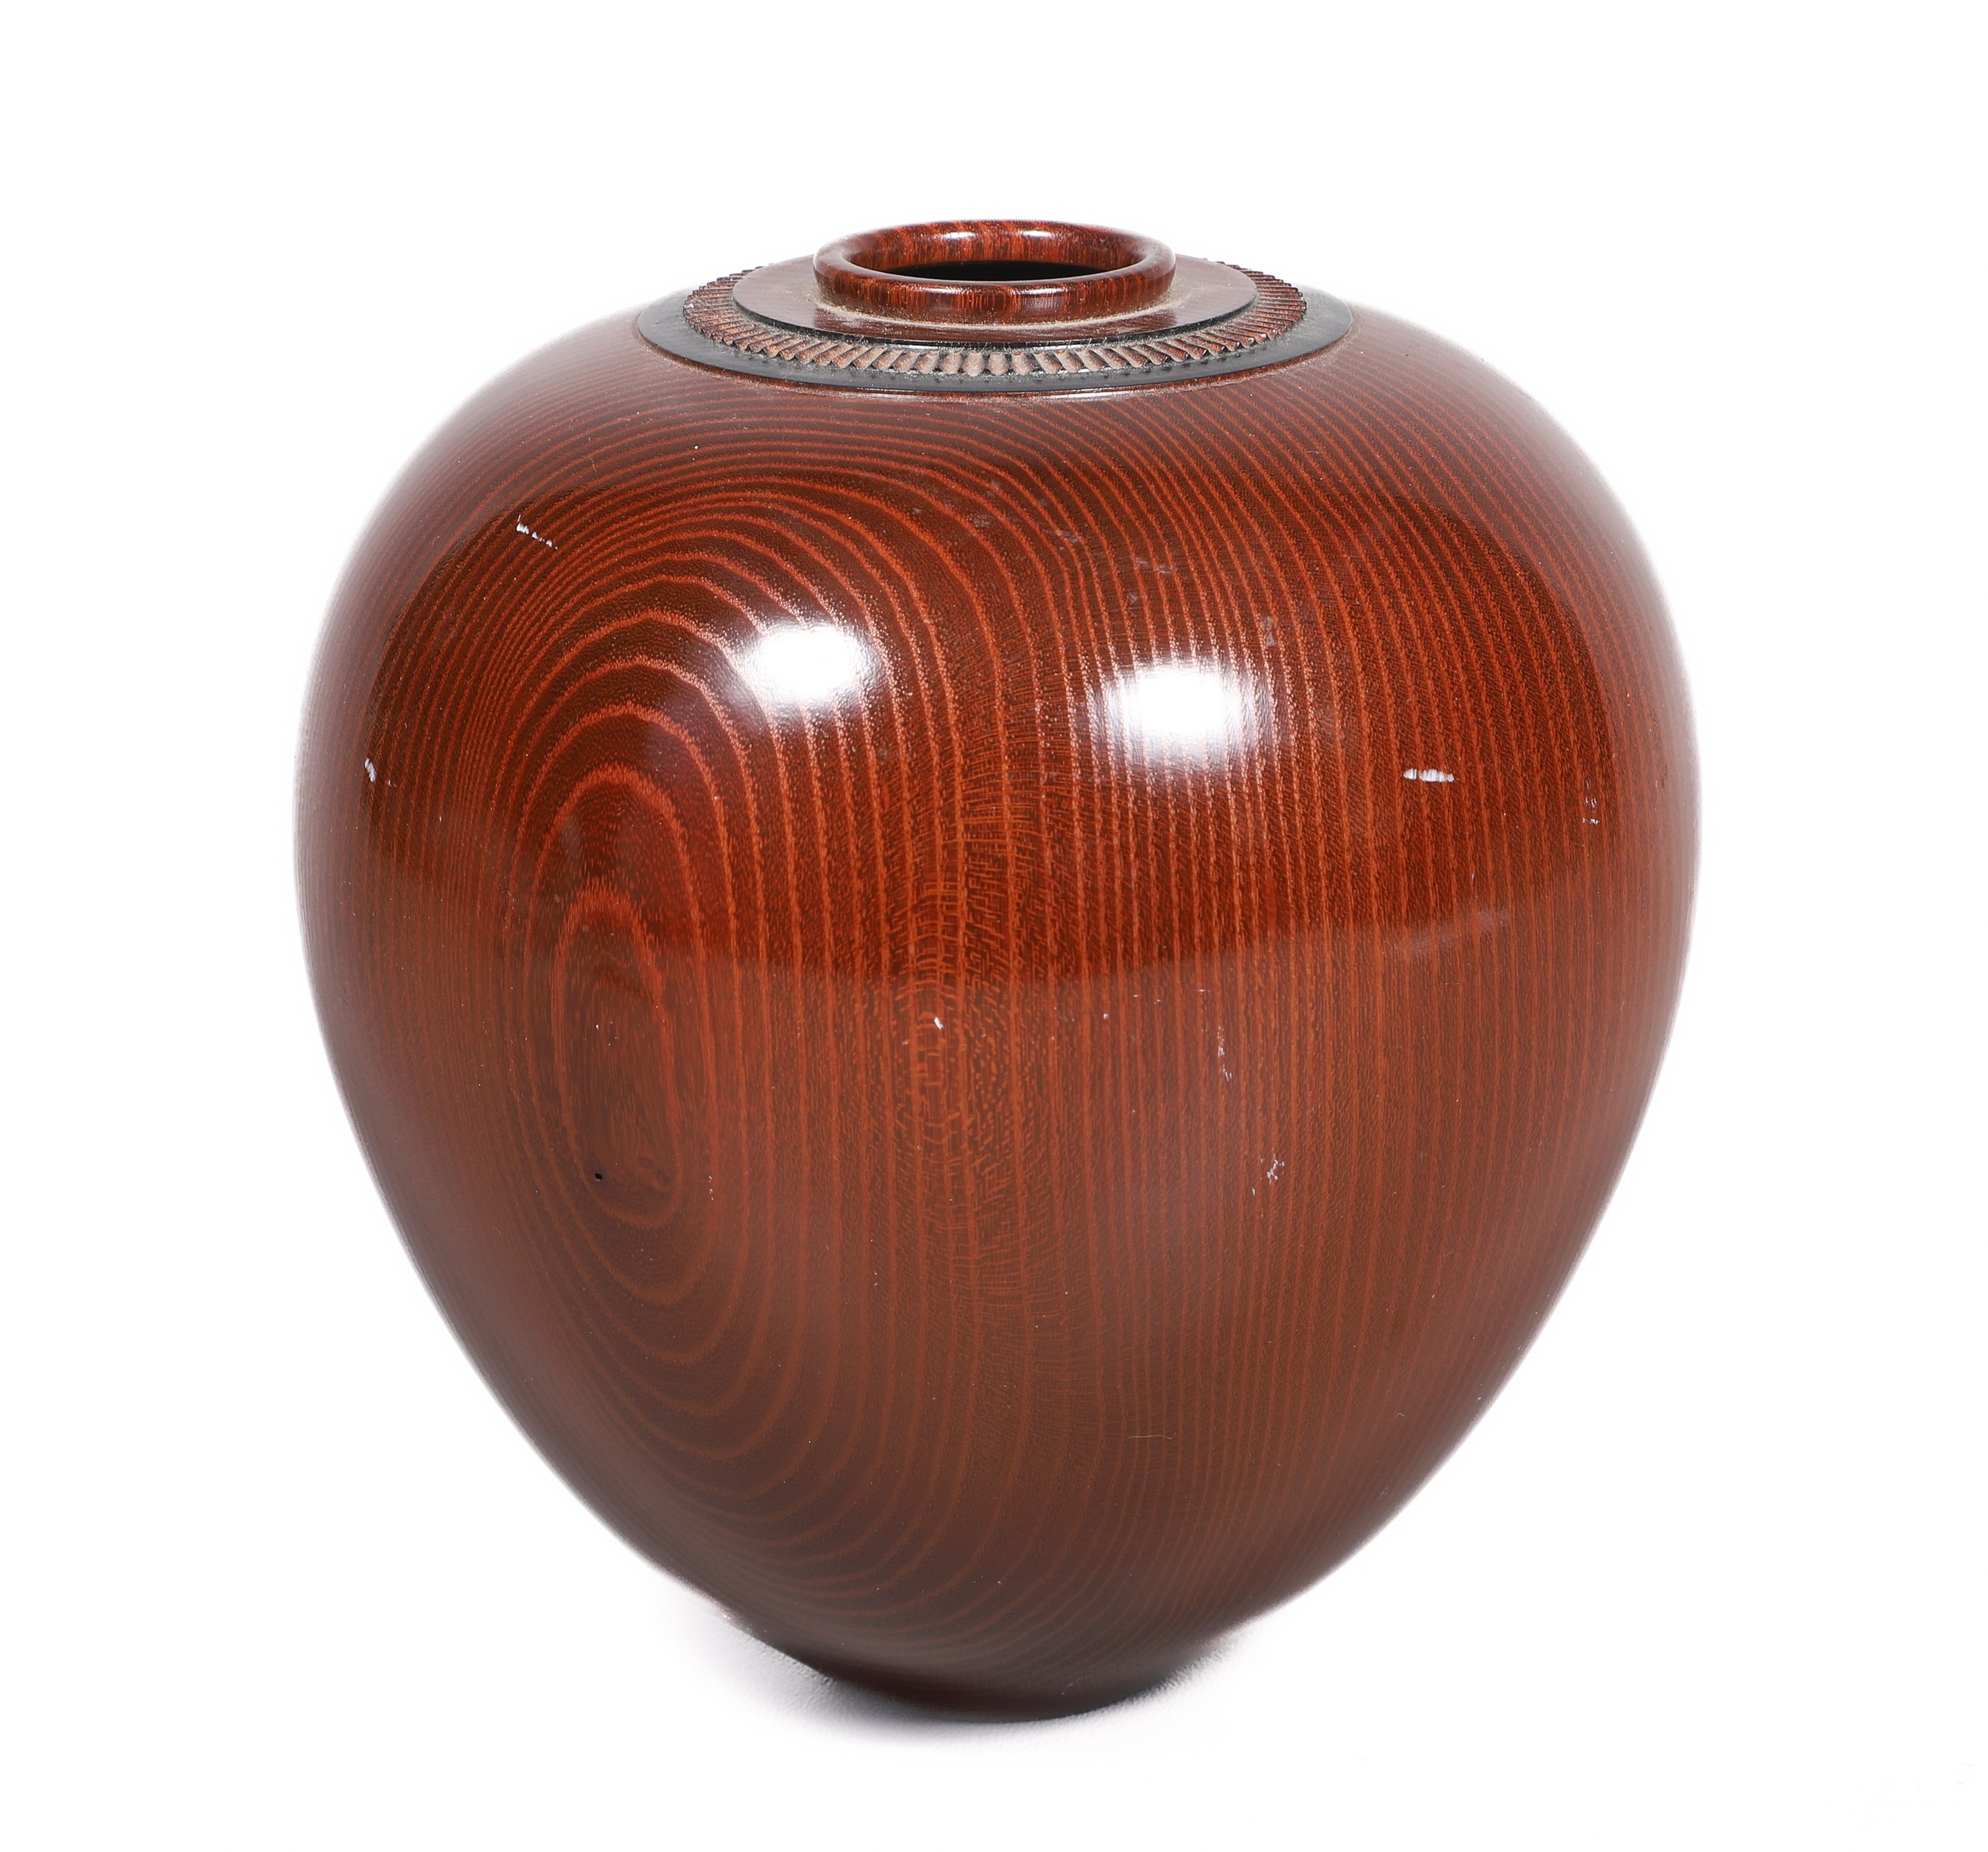 David Souza turned wood vase marked 3b4f1d